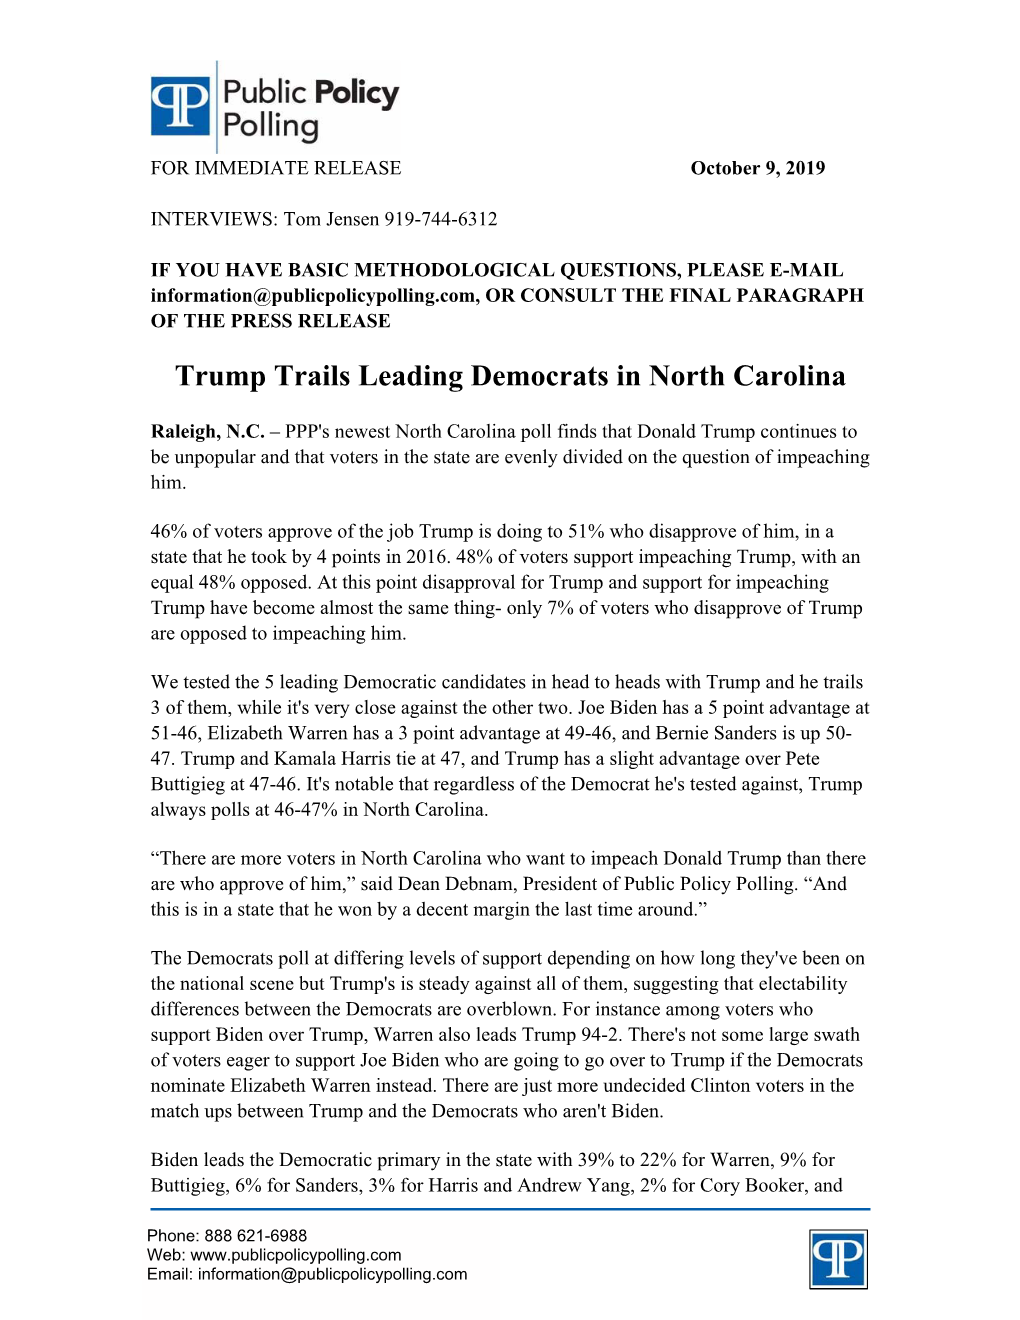 Trump Trails Leading Democrats in North Carolina